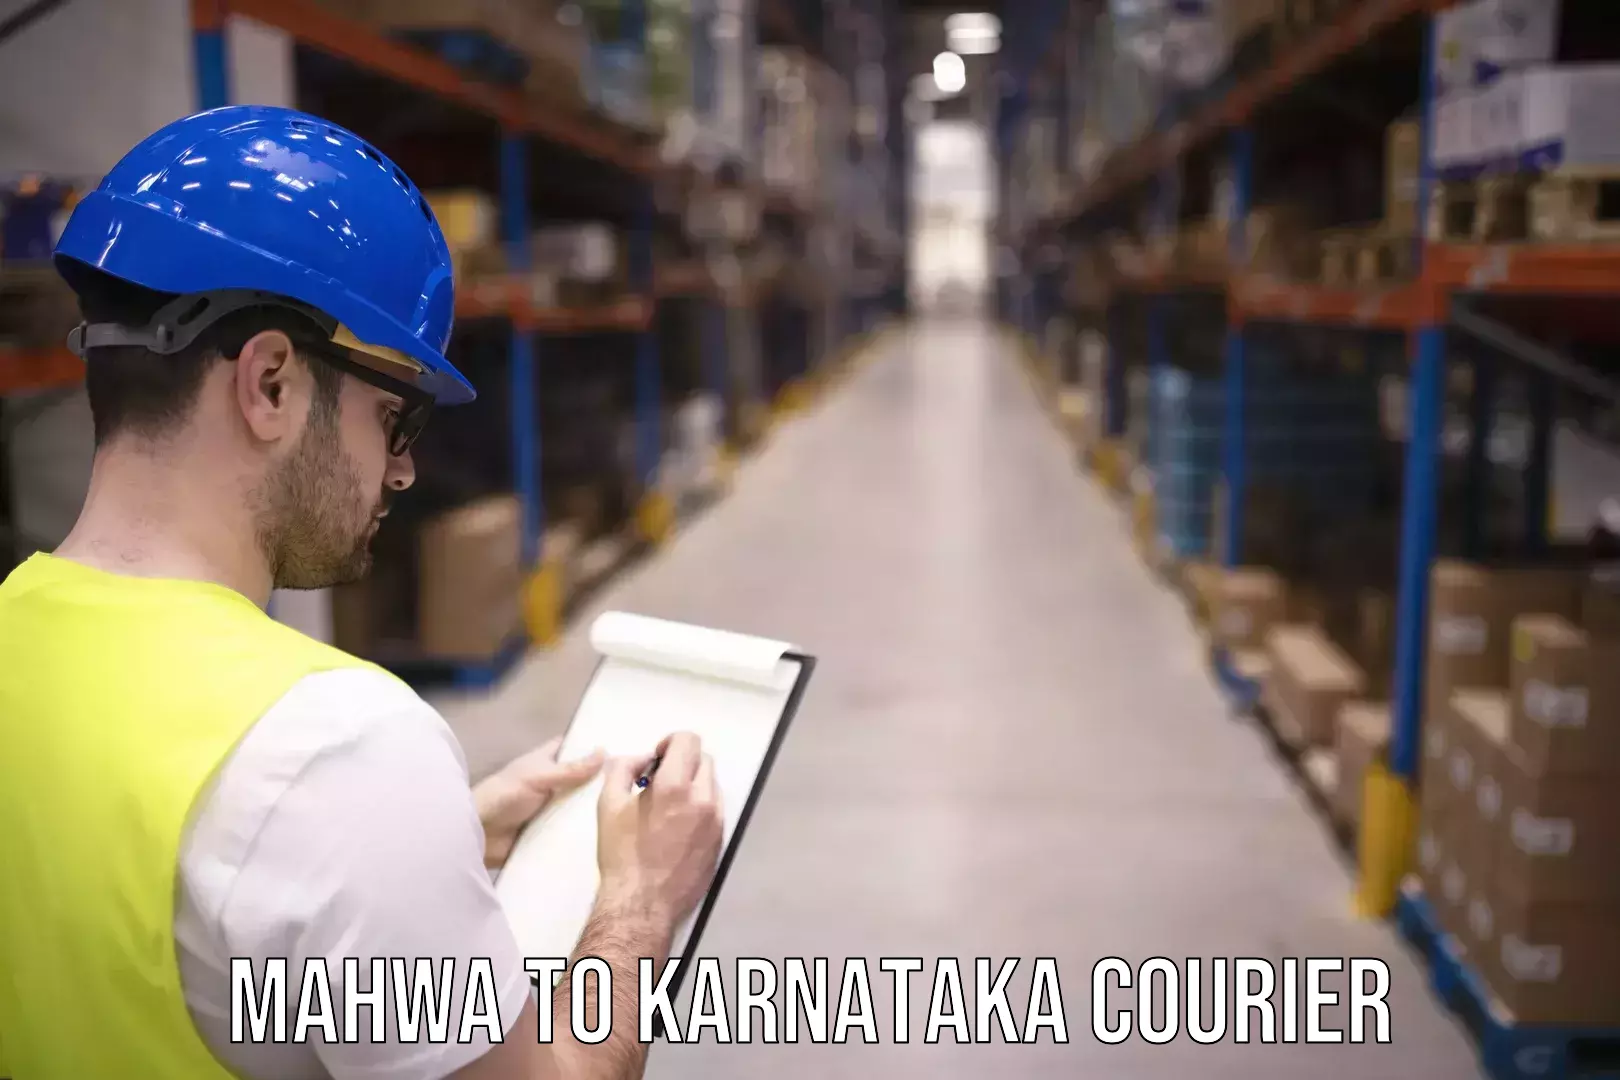 Digital courier platforms Mahwa to Karnataka